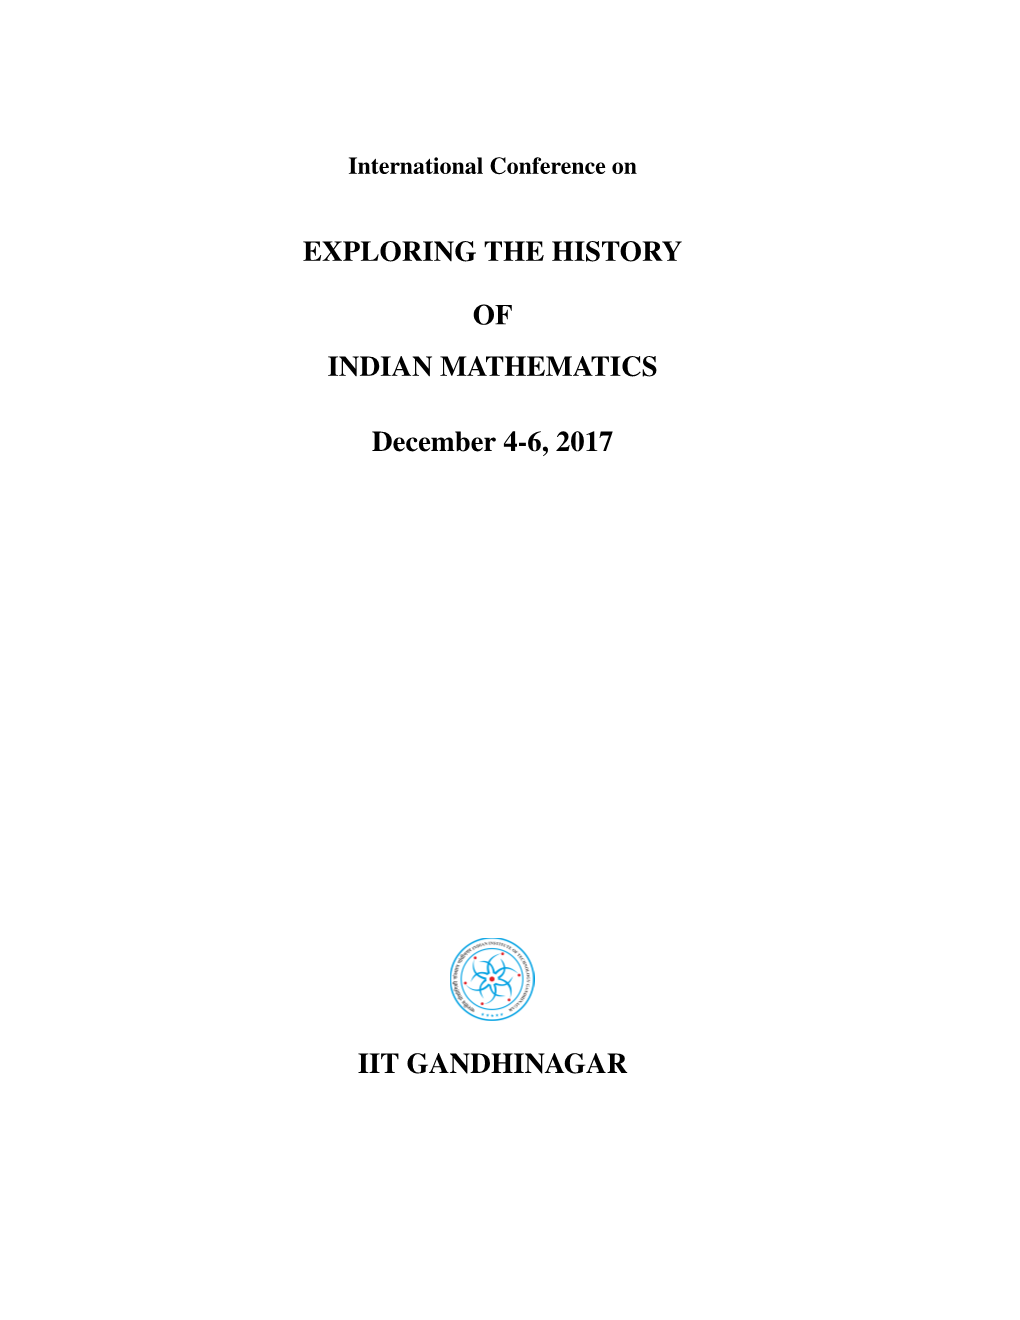 EXPLORING the HISTORY of INDIAN MATHEMATICS December 4-6, 2017 IIT GANDHINAGAR